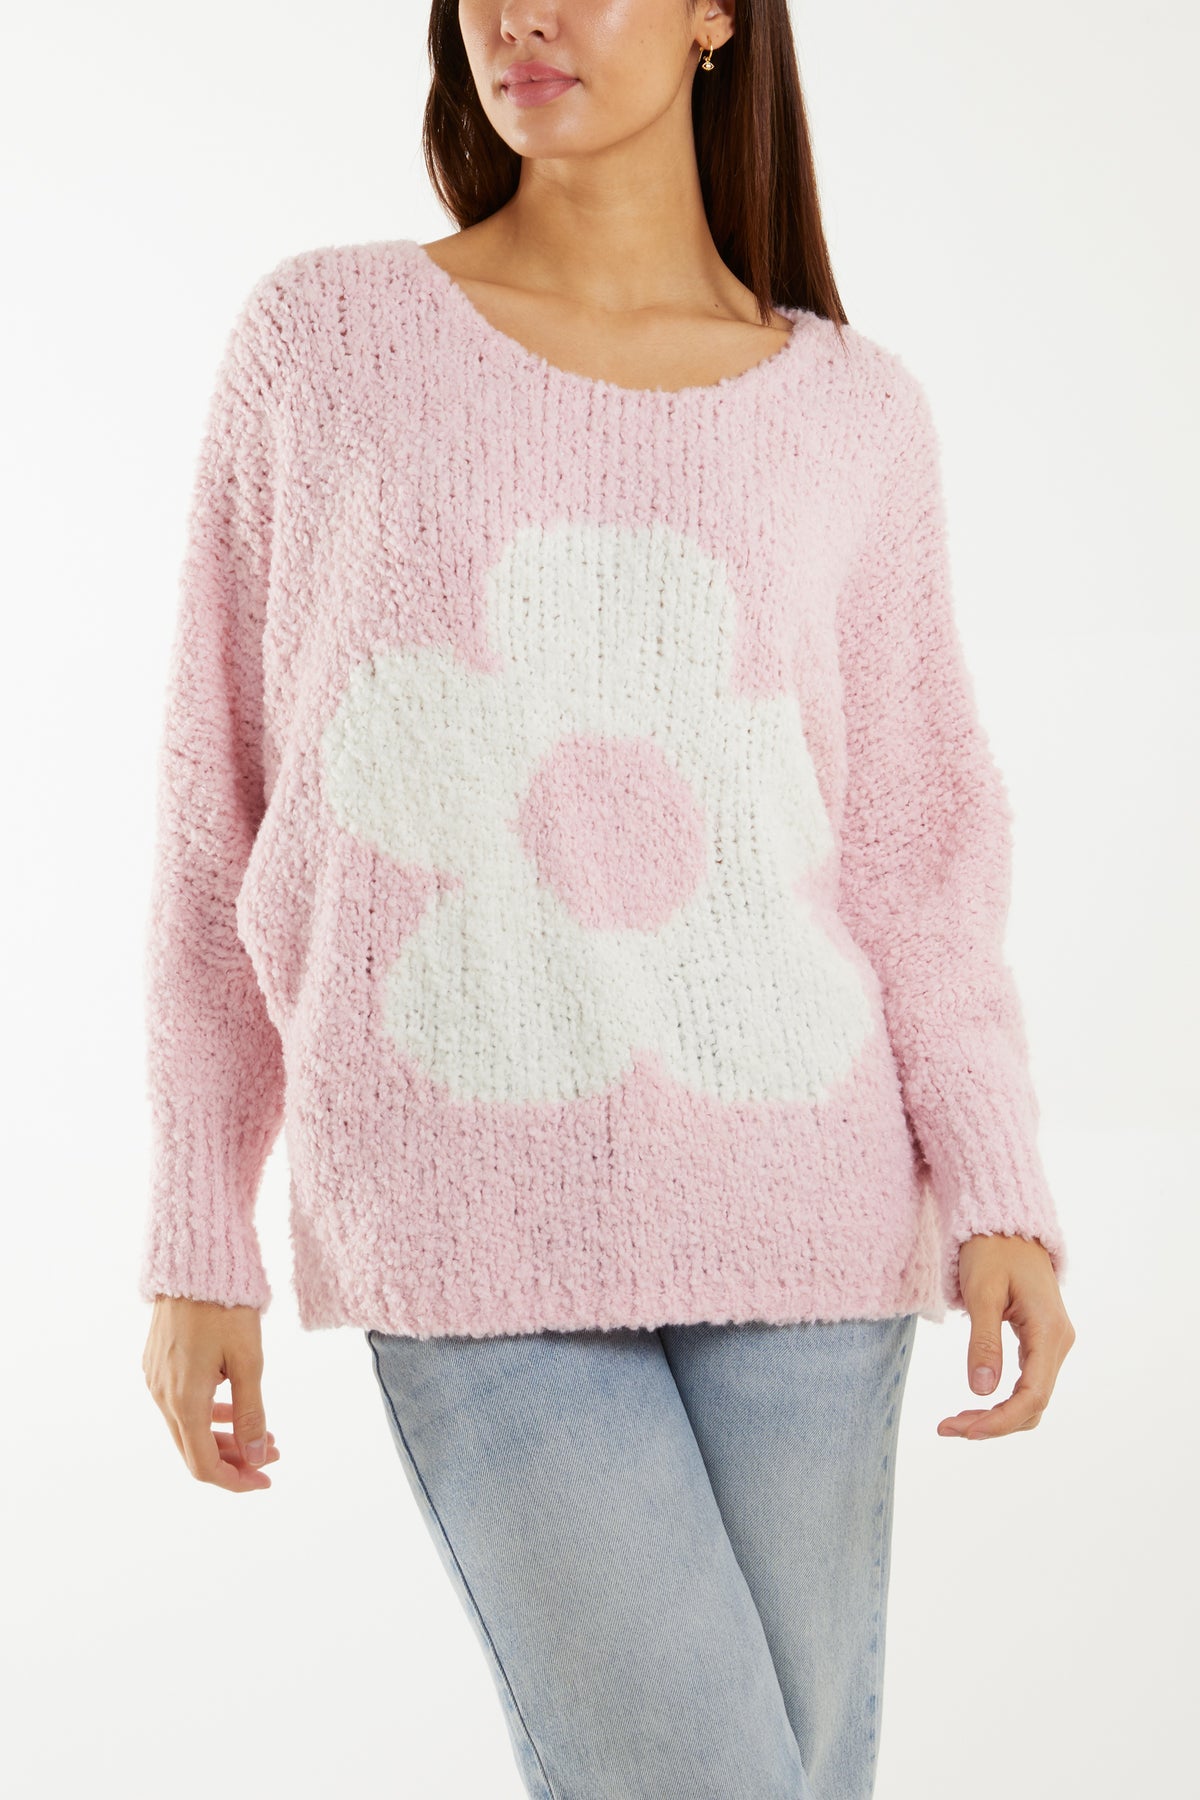 Wool Blend Daisy Boucle Super Soft Knit